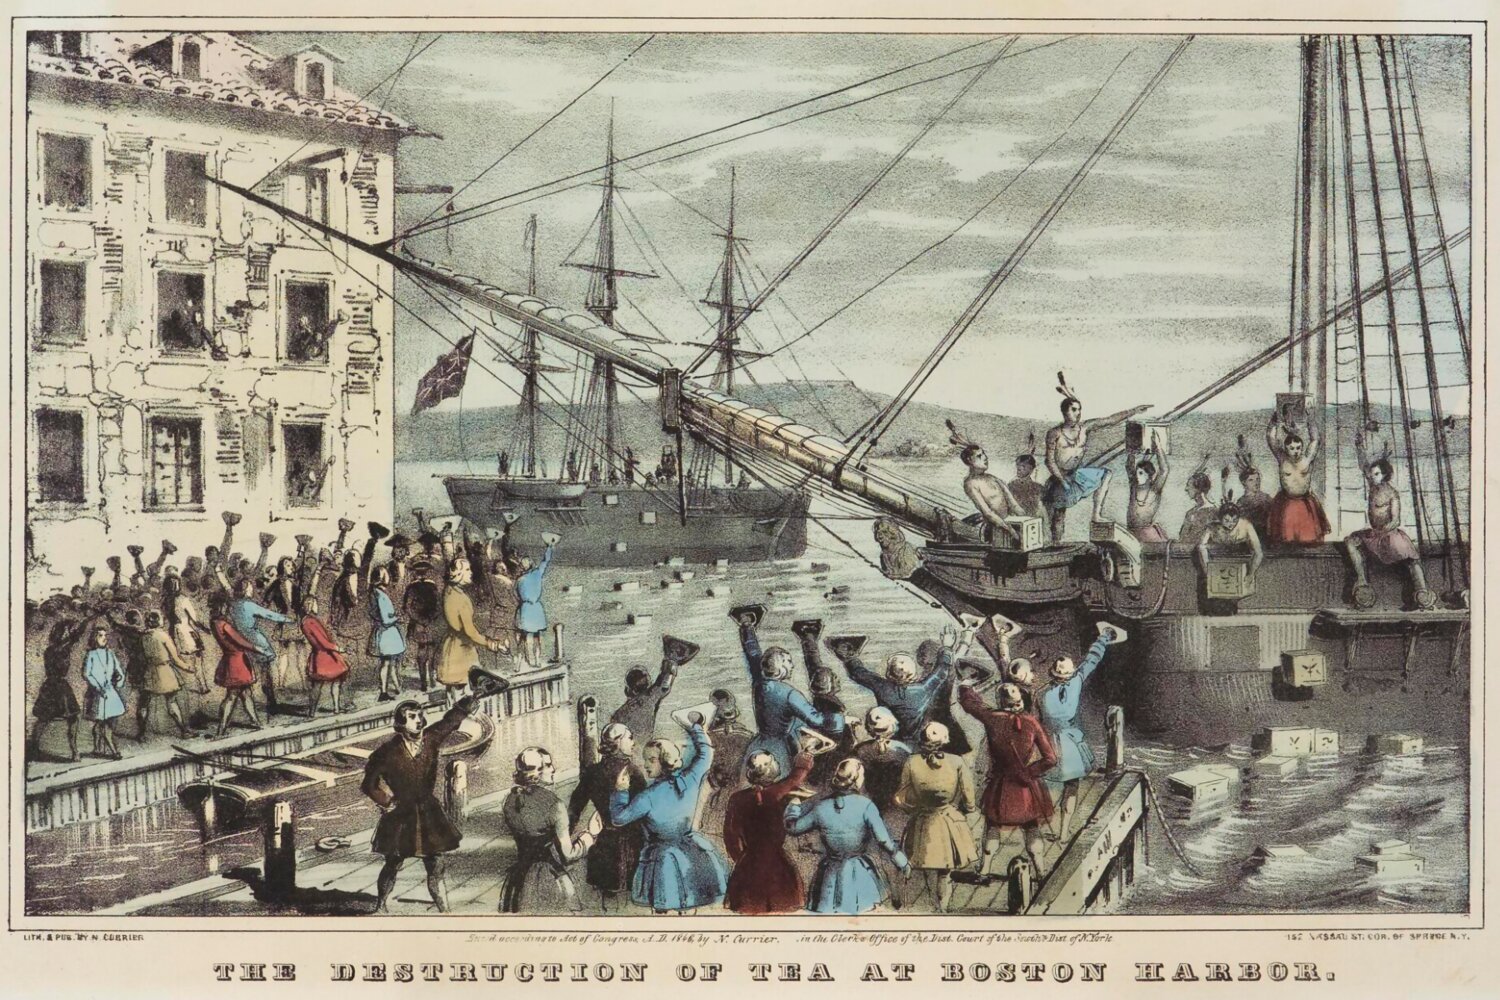 “The Destruction of Tea at Boston Harbor.”